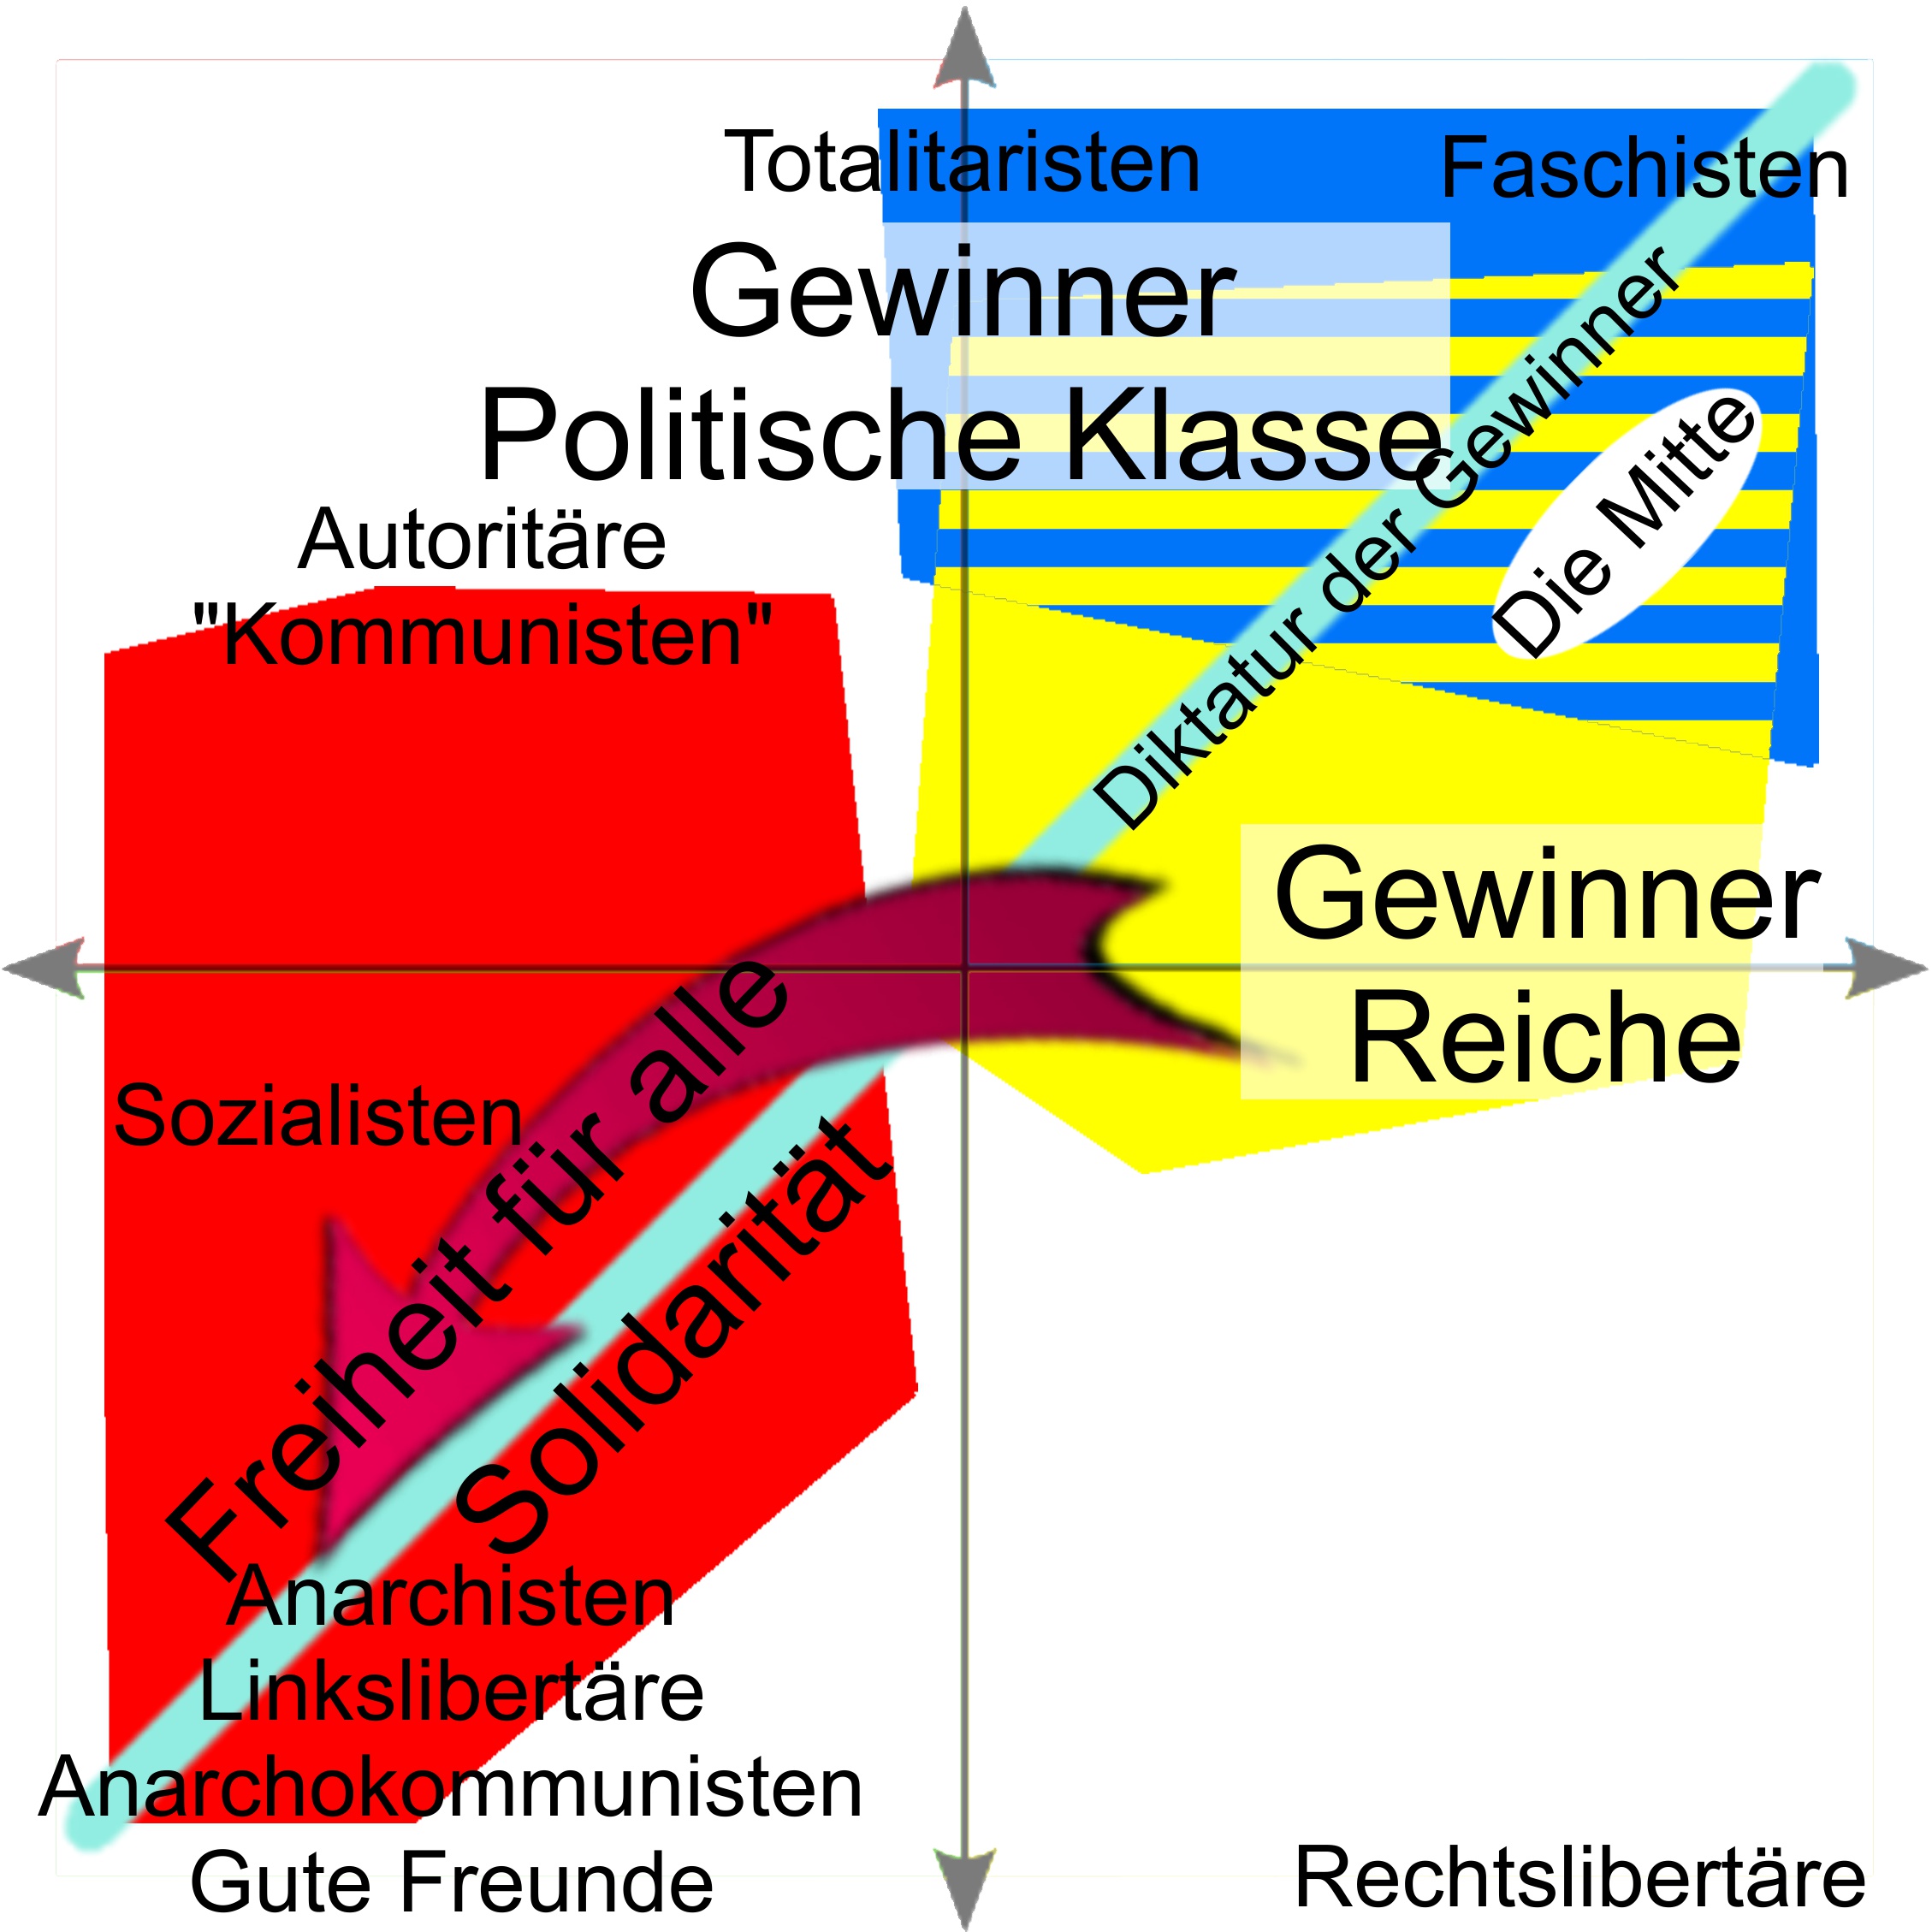 Politisches Spektrum - Systeme - Diktatur der Gewinner: - rechtsautoritär - linksautoritär - rechtslibertär - linkslibertär